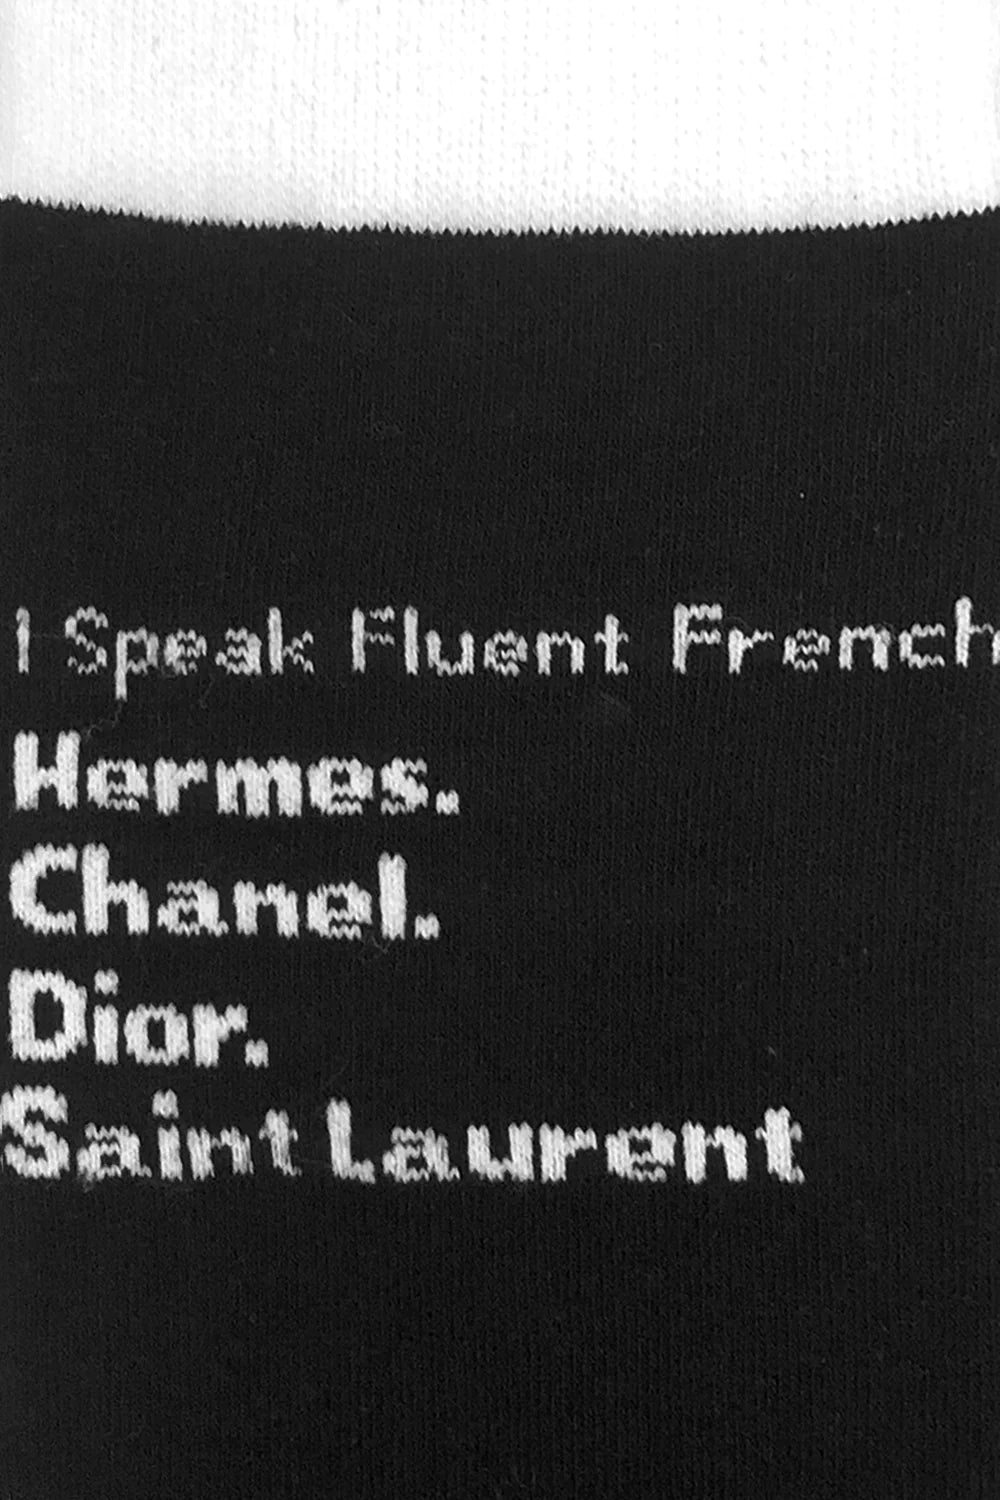 Fluent French Socks